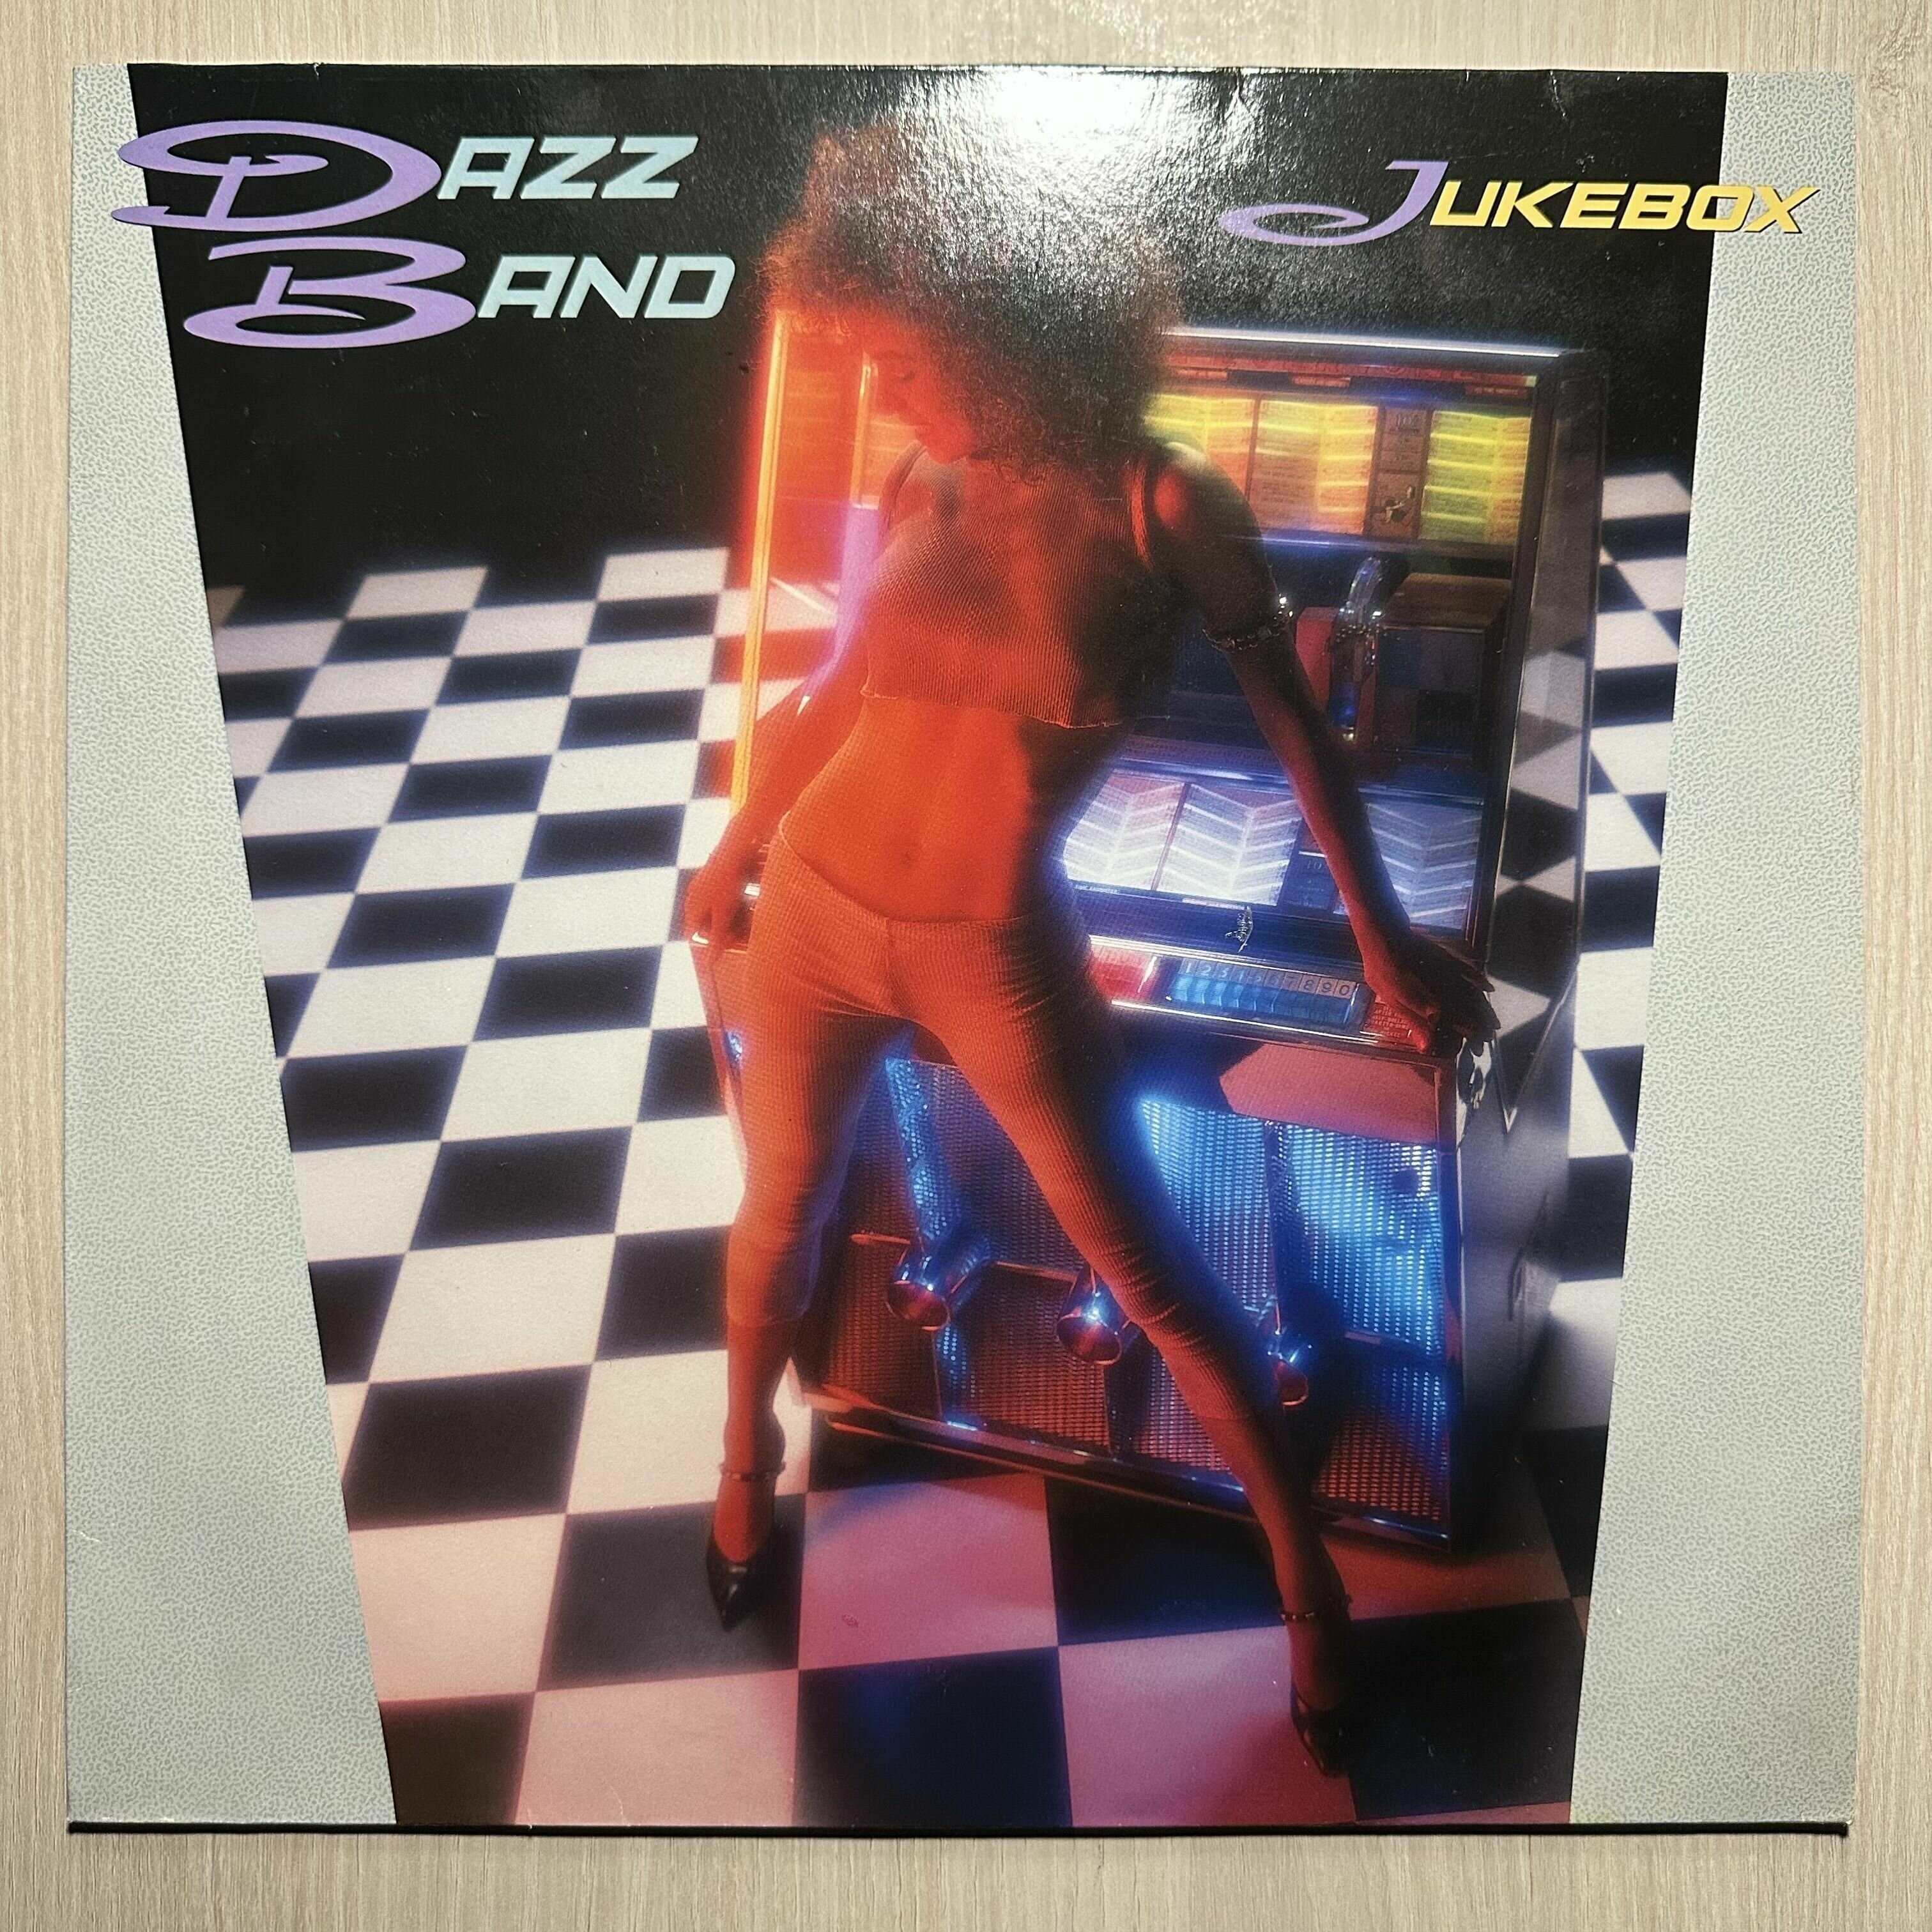 Виниловая пластинка Dazz Band Jukebox (Европа 1984г.)